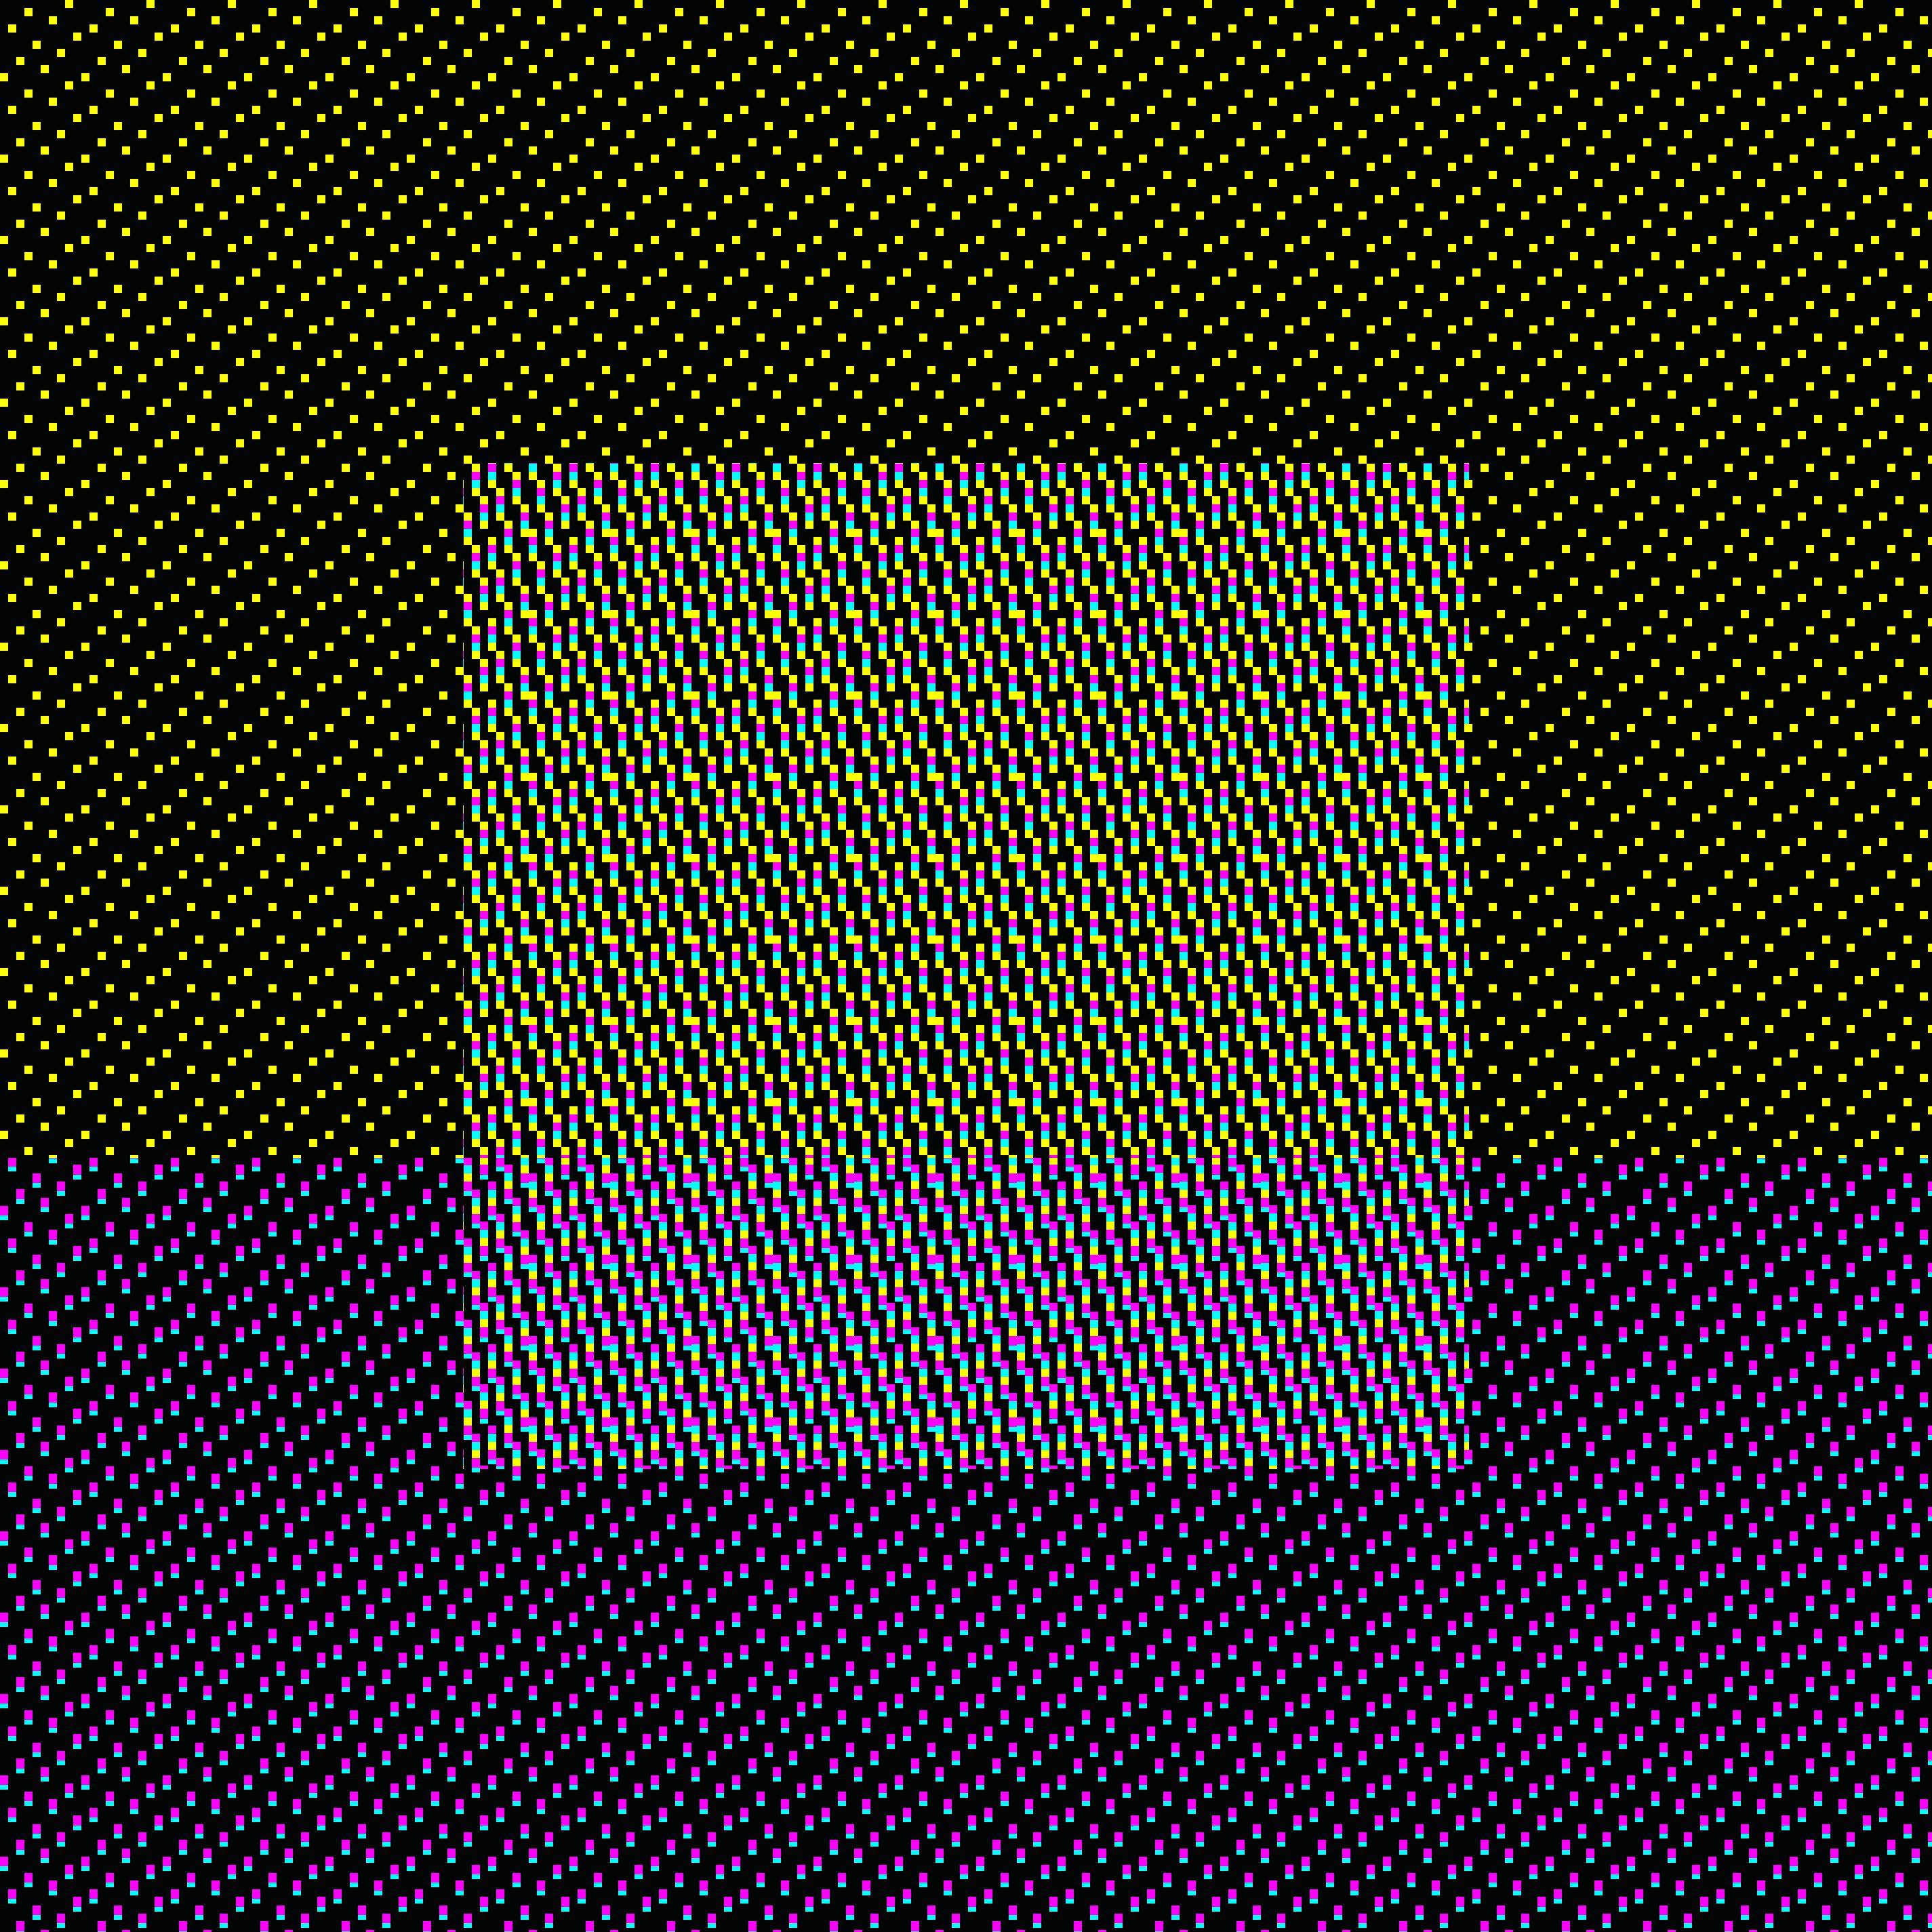 Color Blocks Matrix 1~9, Digital on Metal - Abstract Print by Decheng Cui